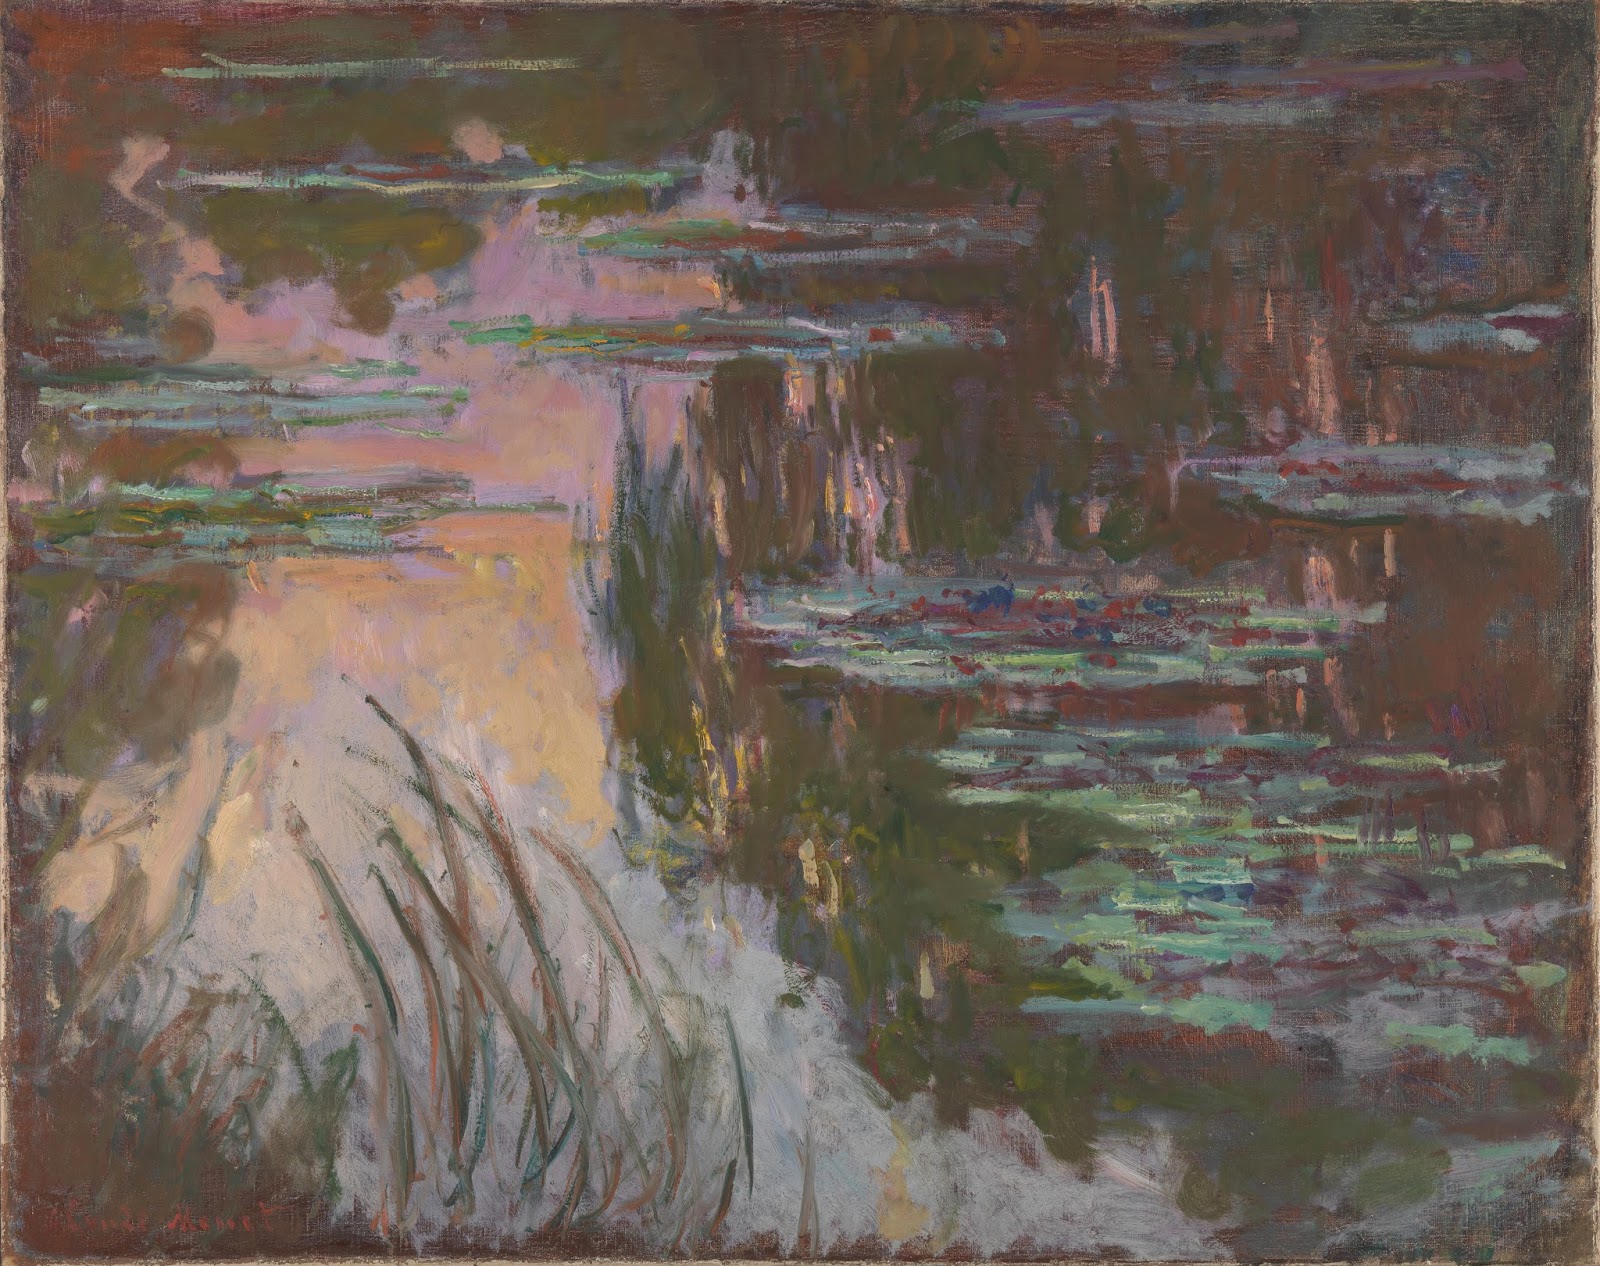 Claude+Monet-1840-1926 (992).jpg